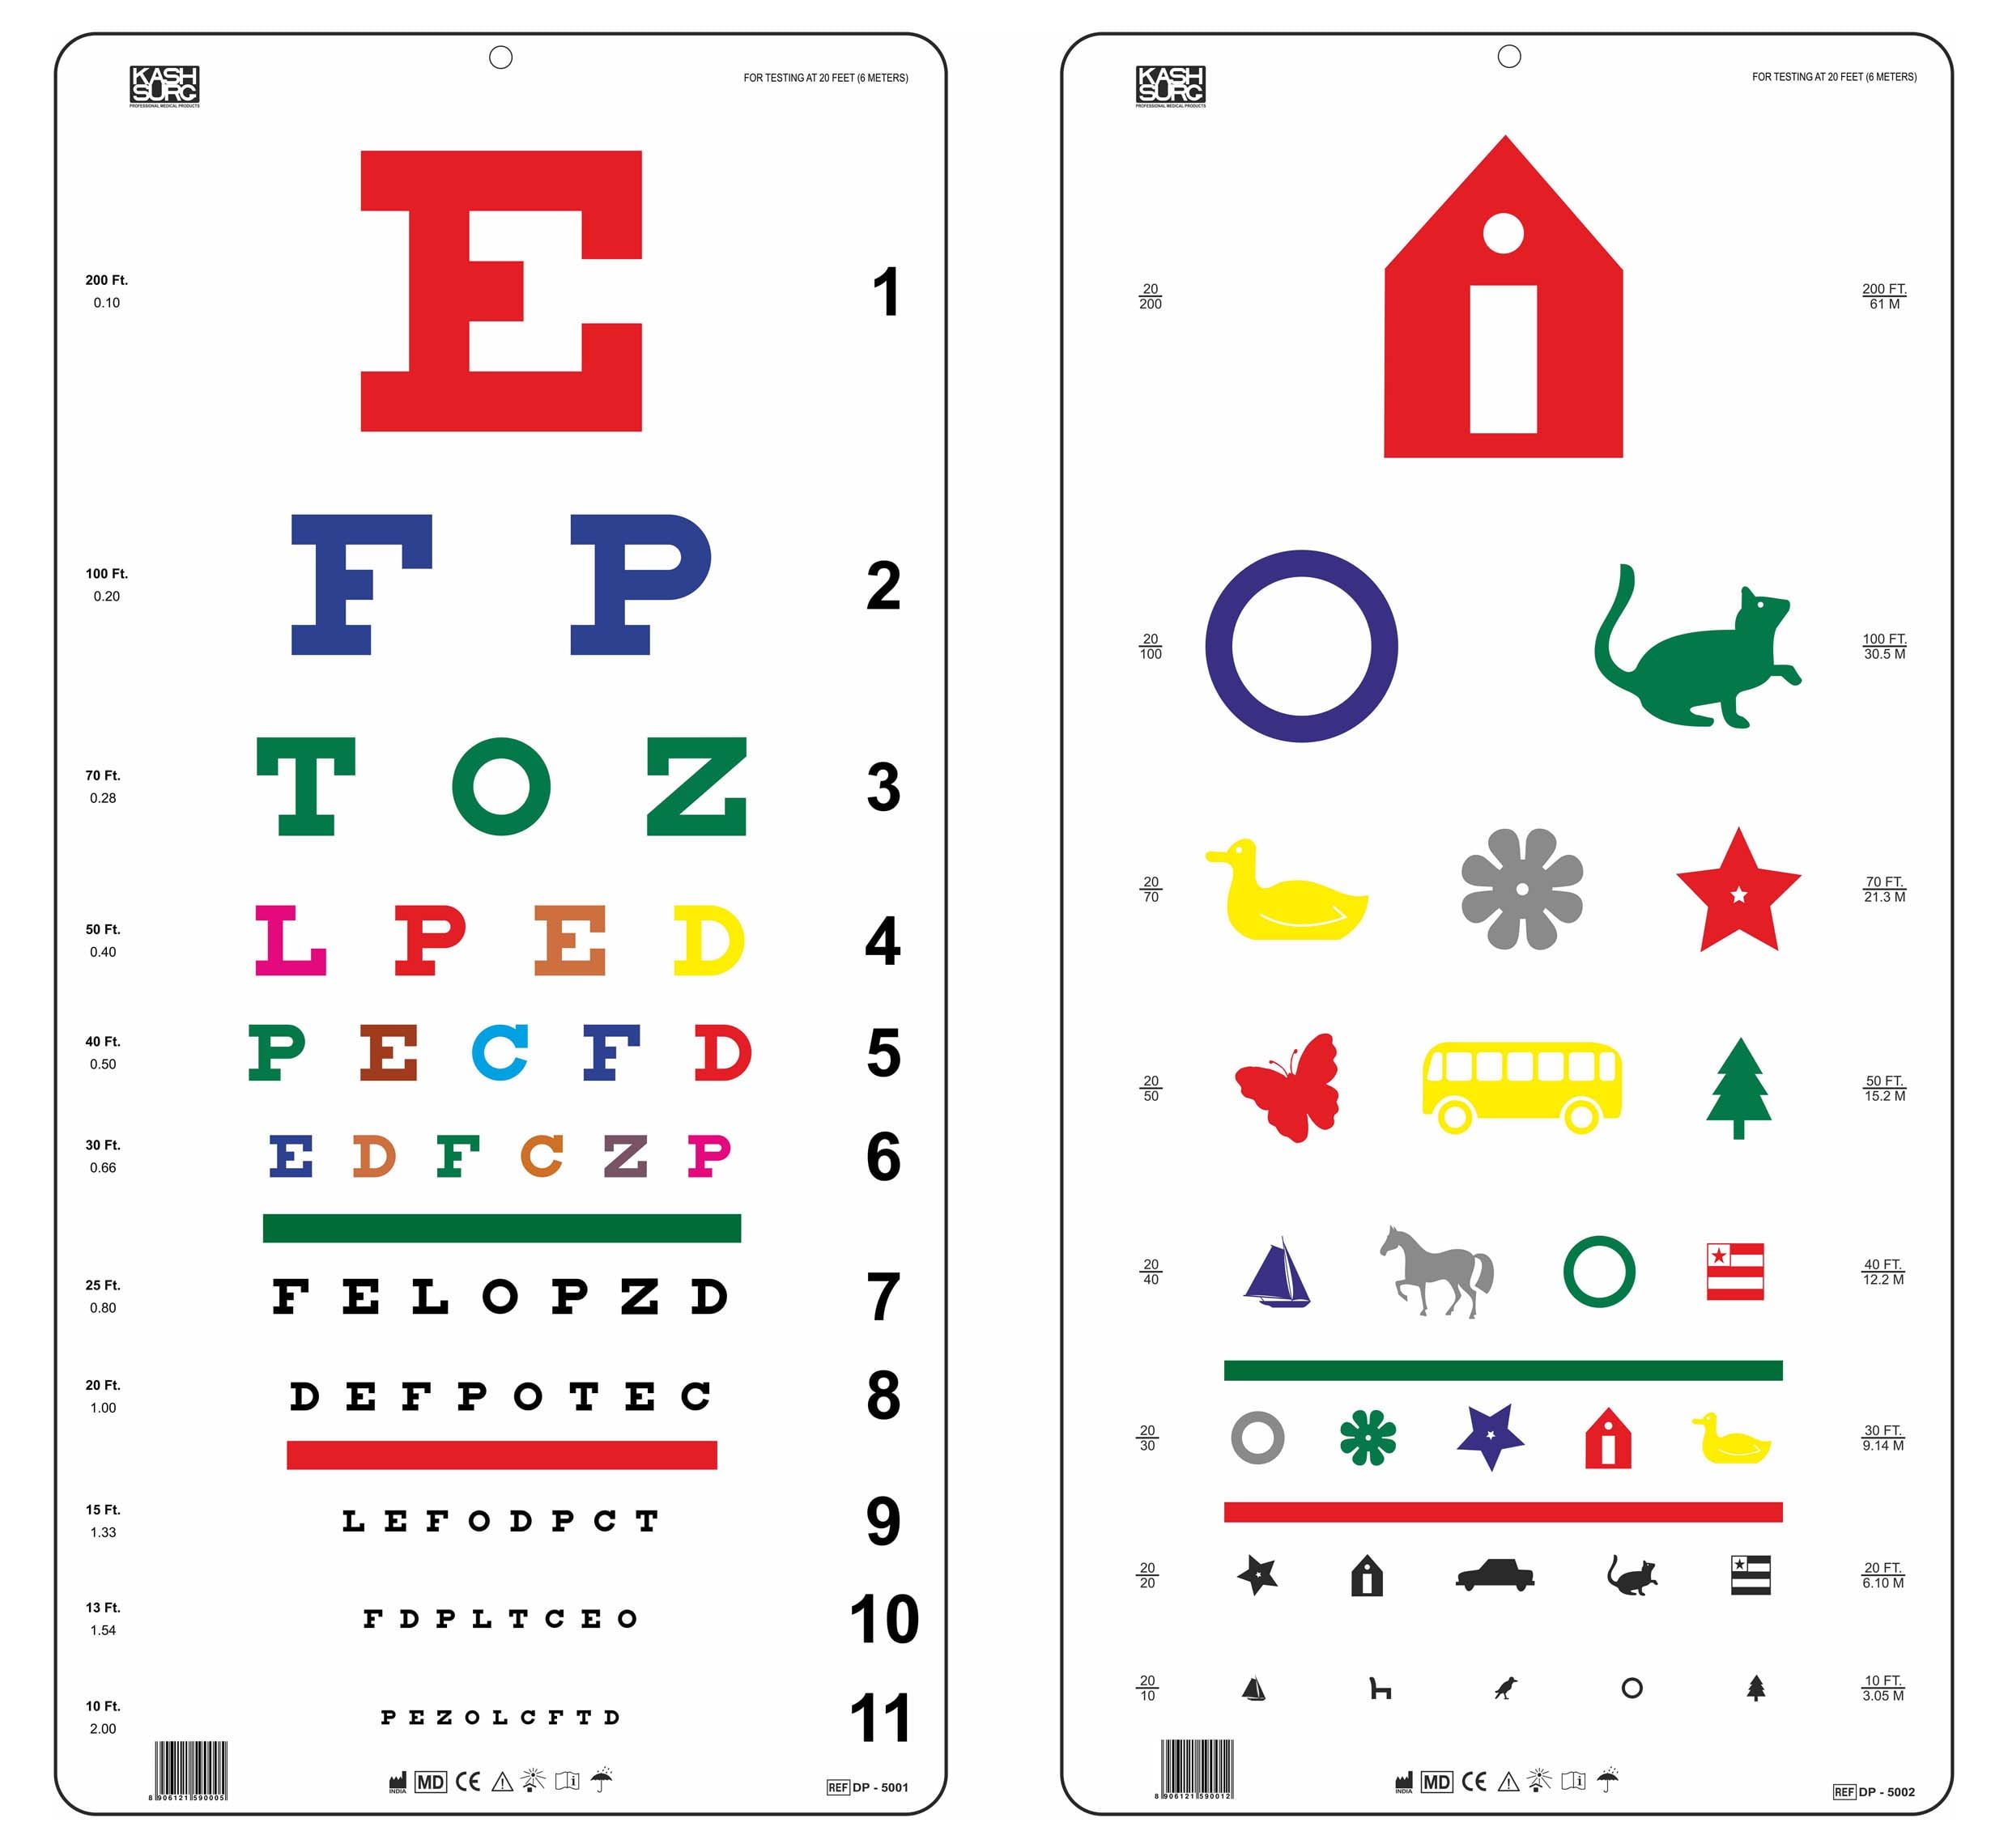 EMI Snellen and Kindergarten Eye Chart